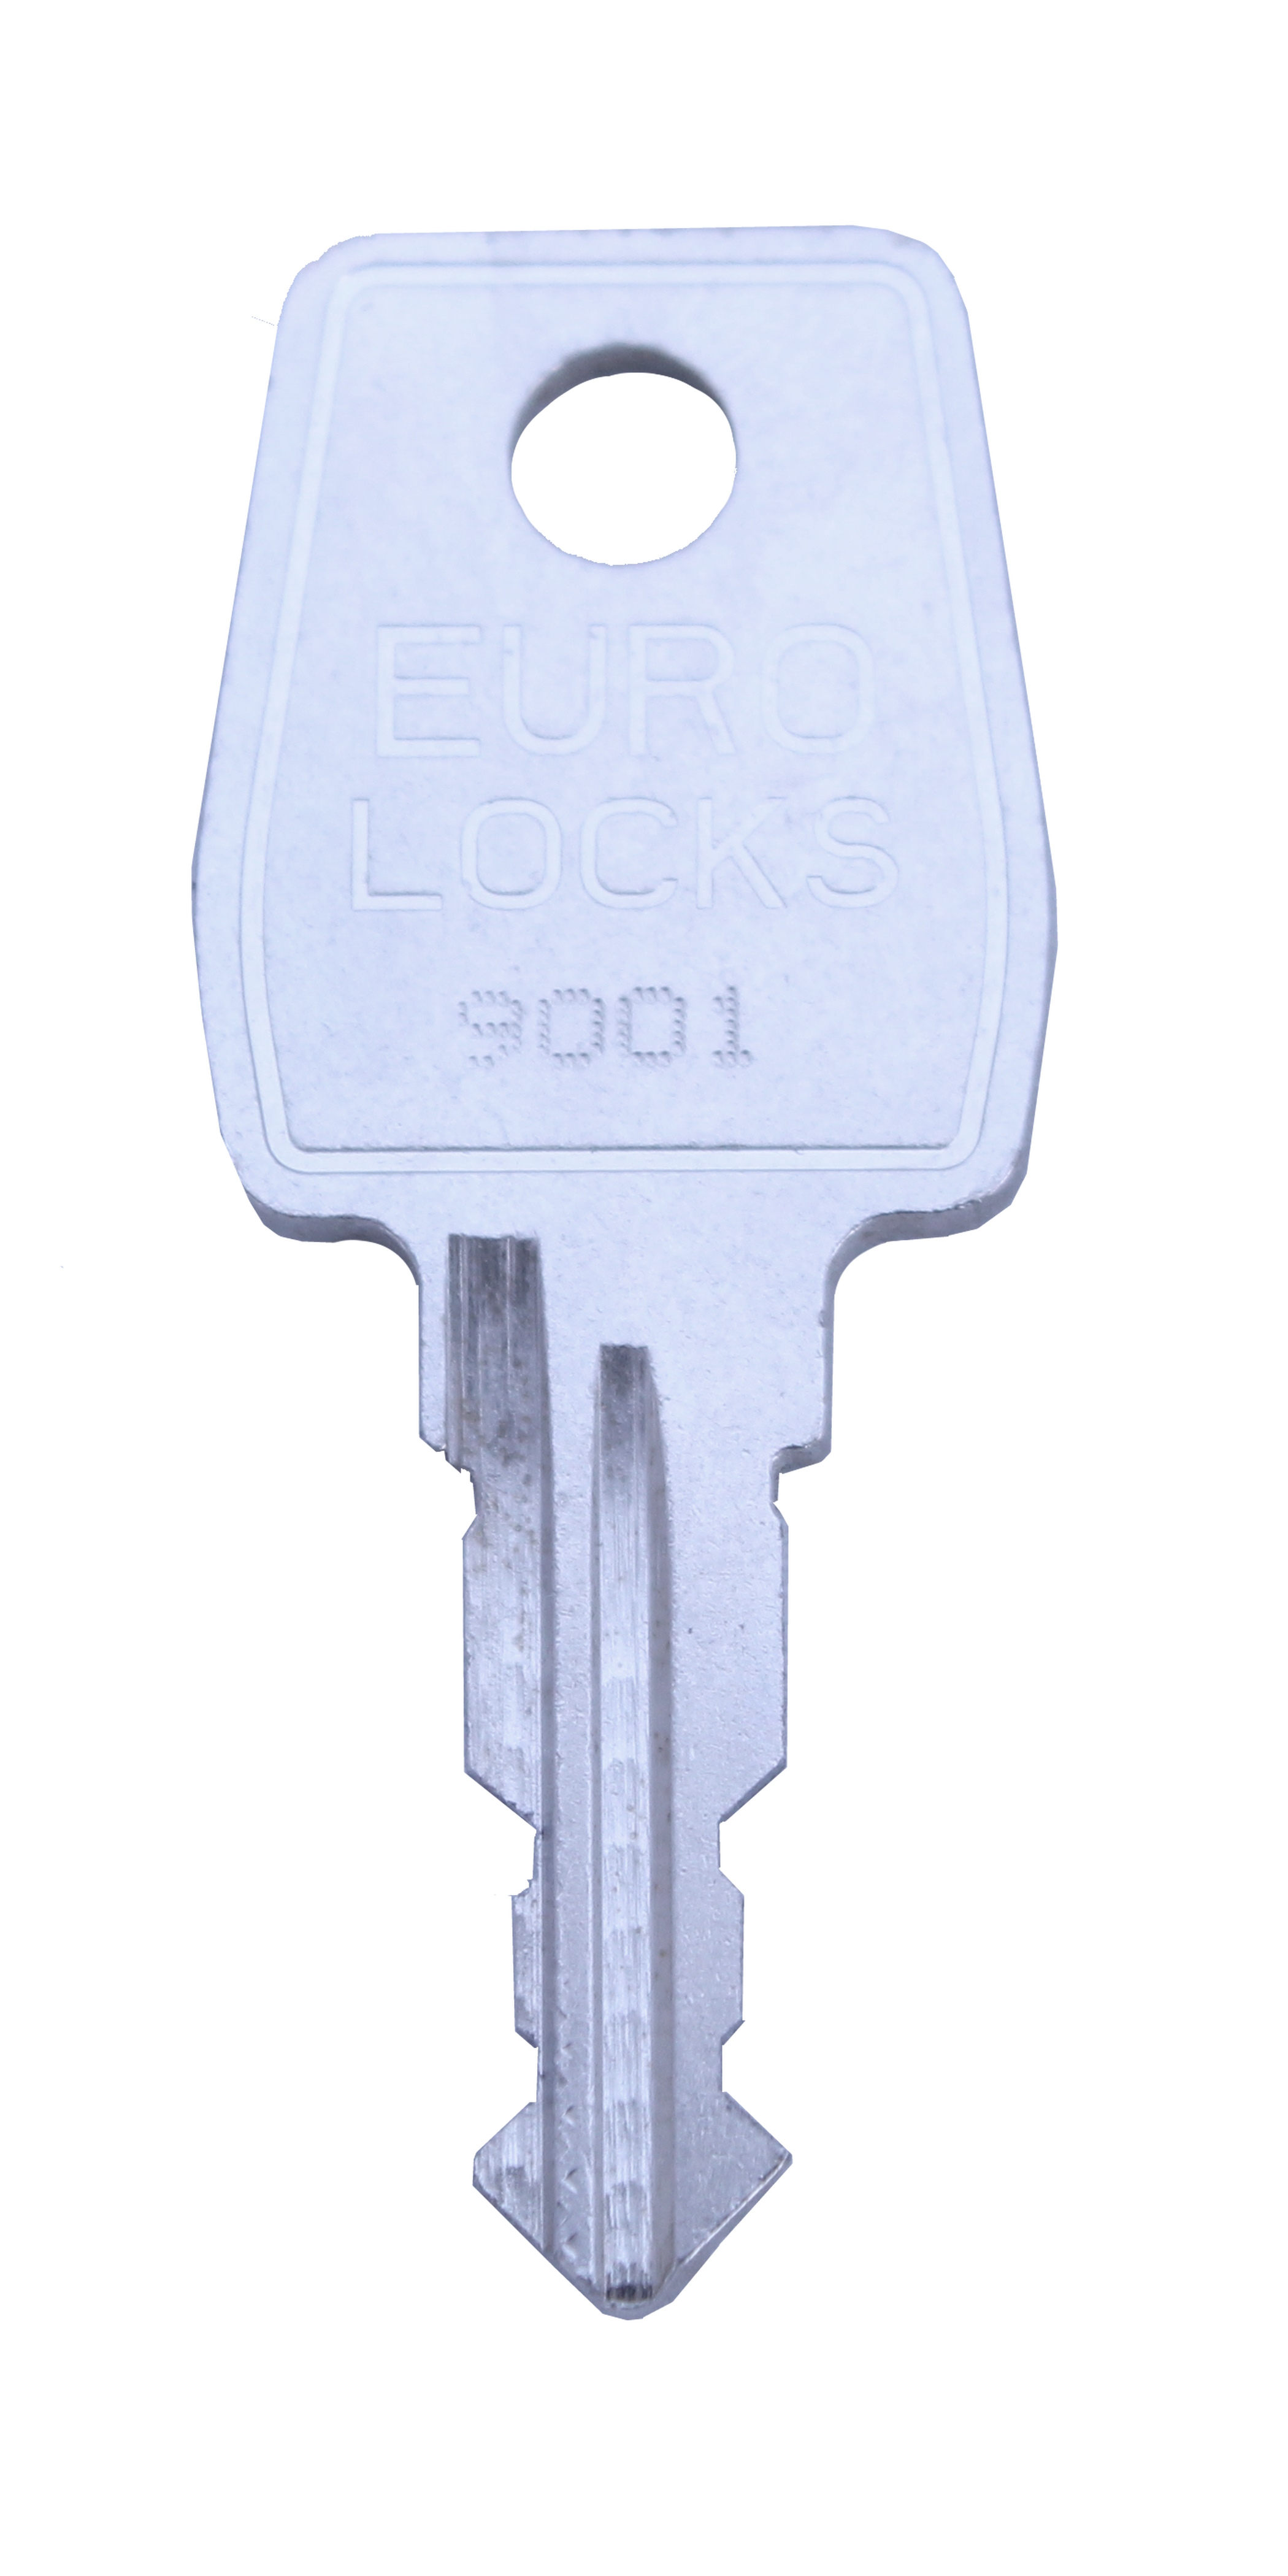 EUROLOCKS Schlüssel 9001